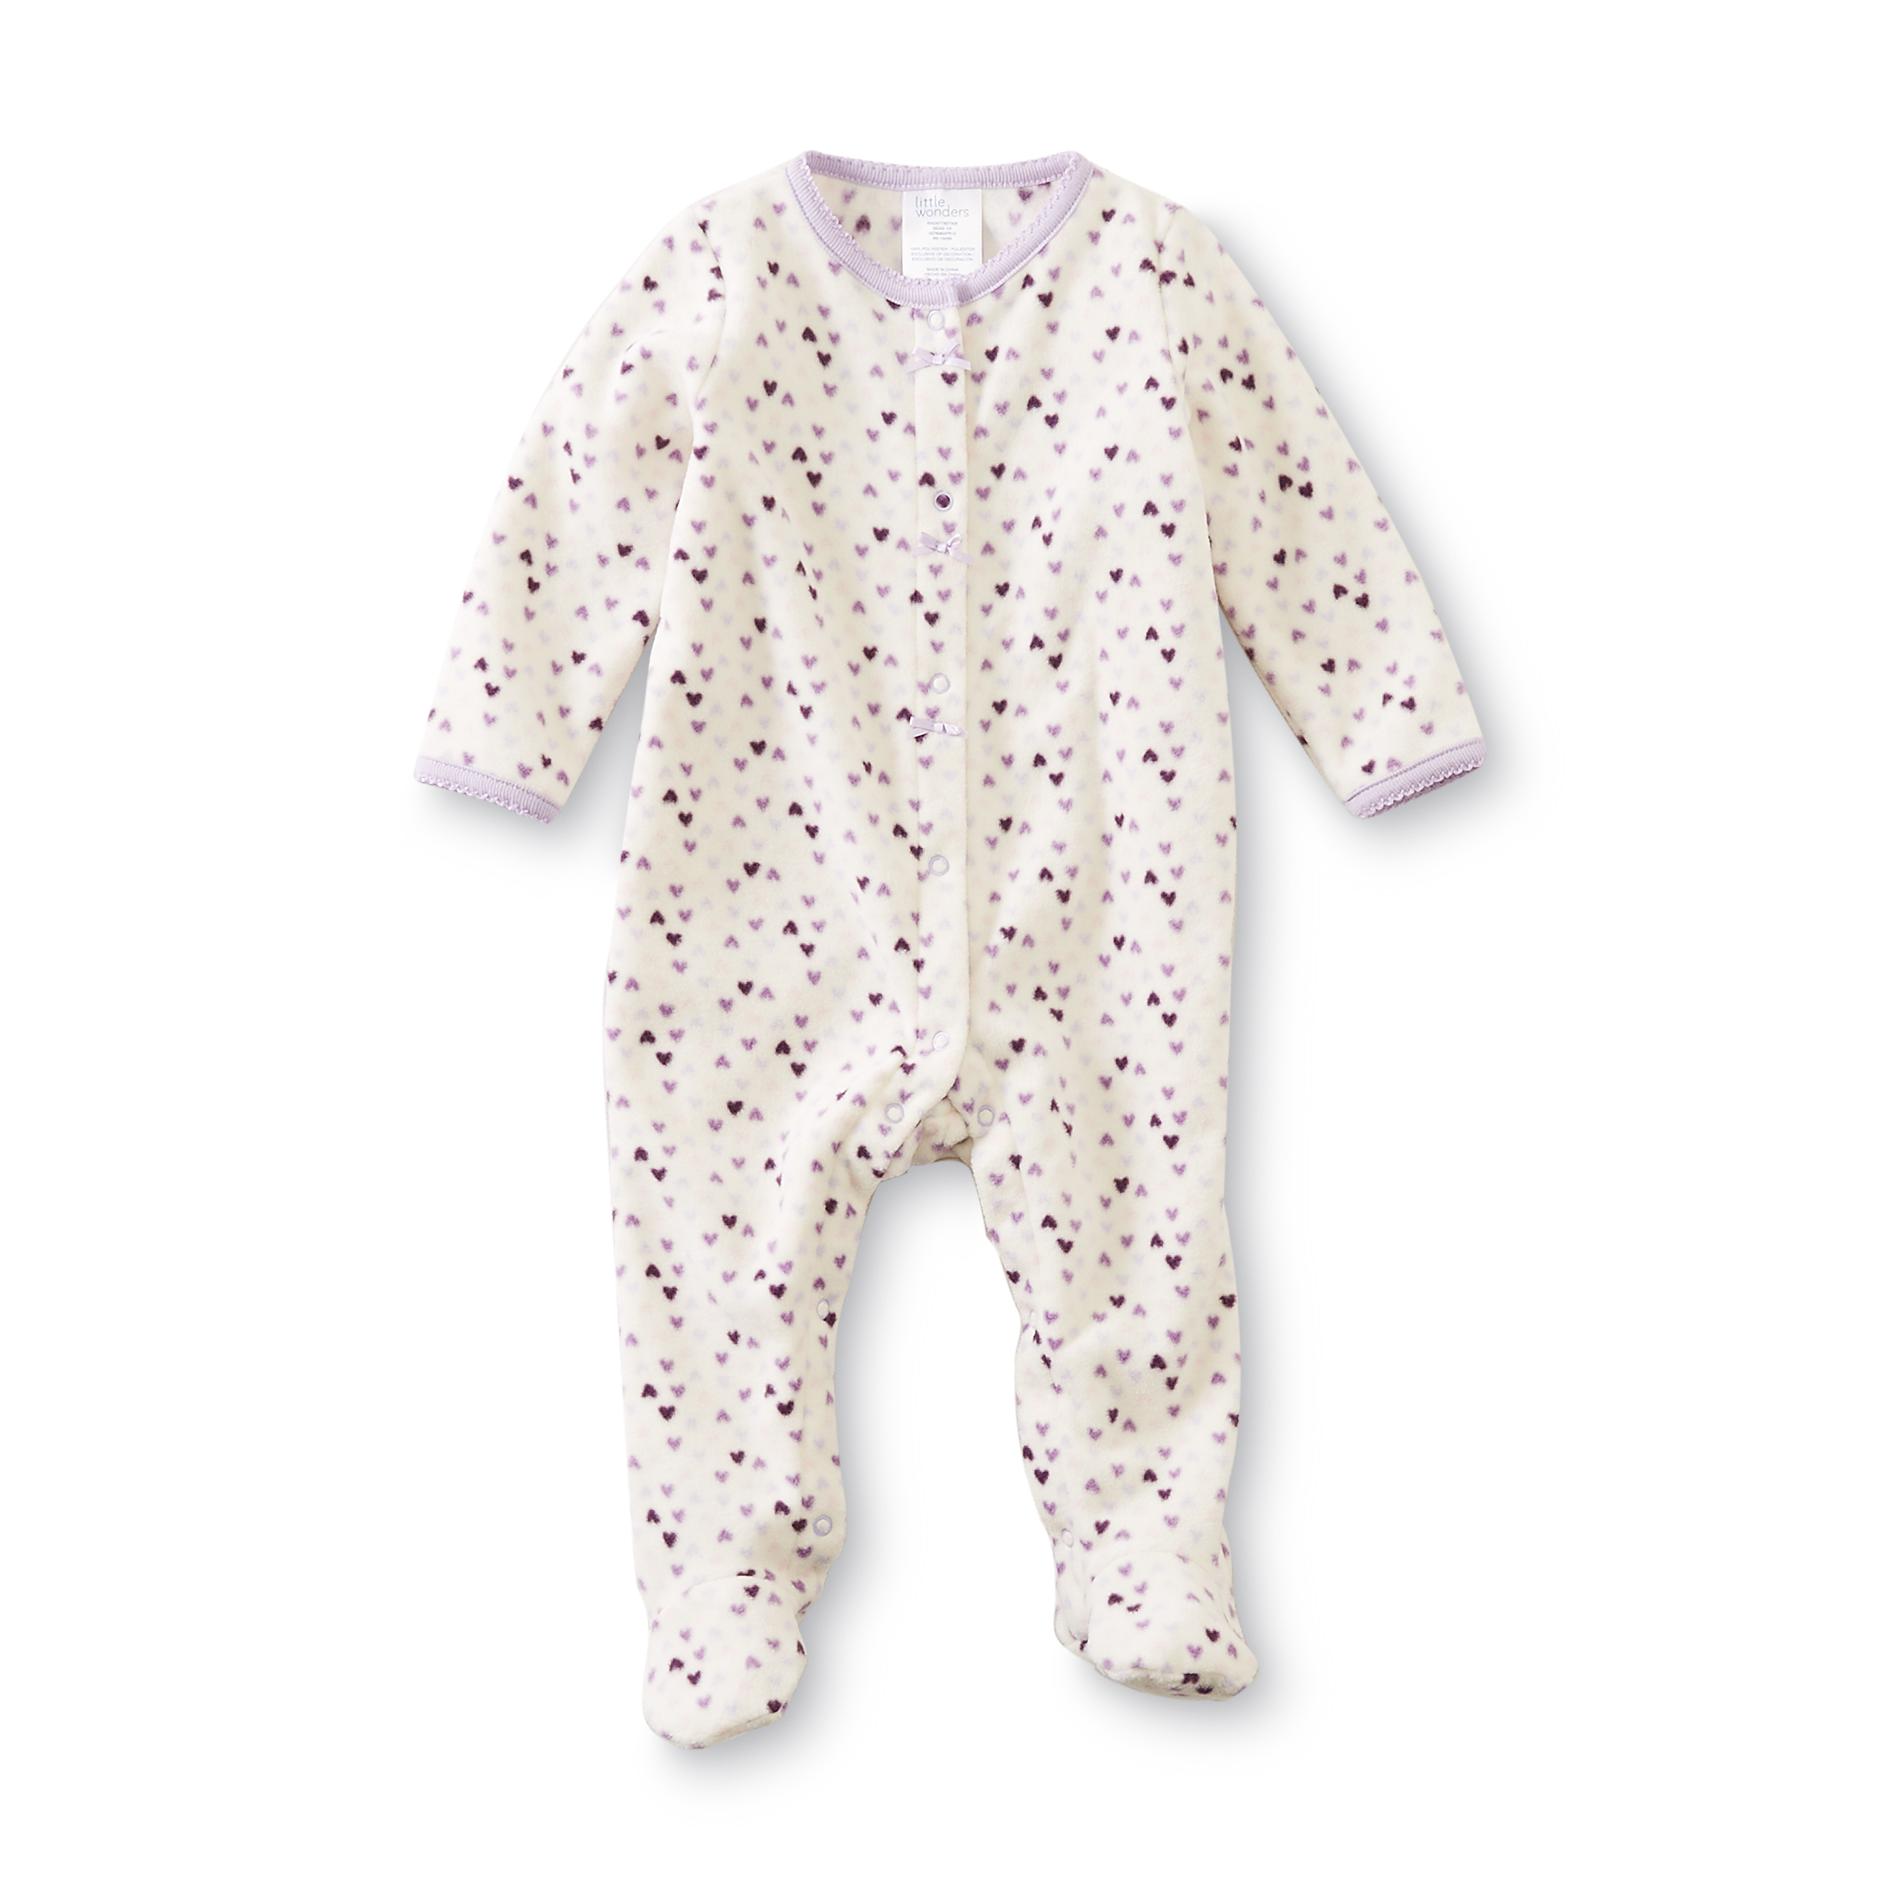 Little Wonders Infant Girl's Sleeper Pajamas - Hearts